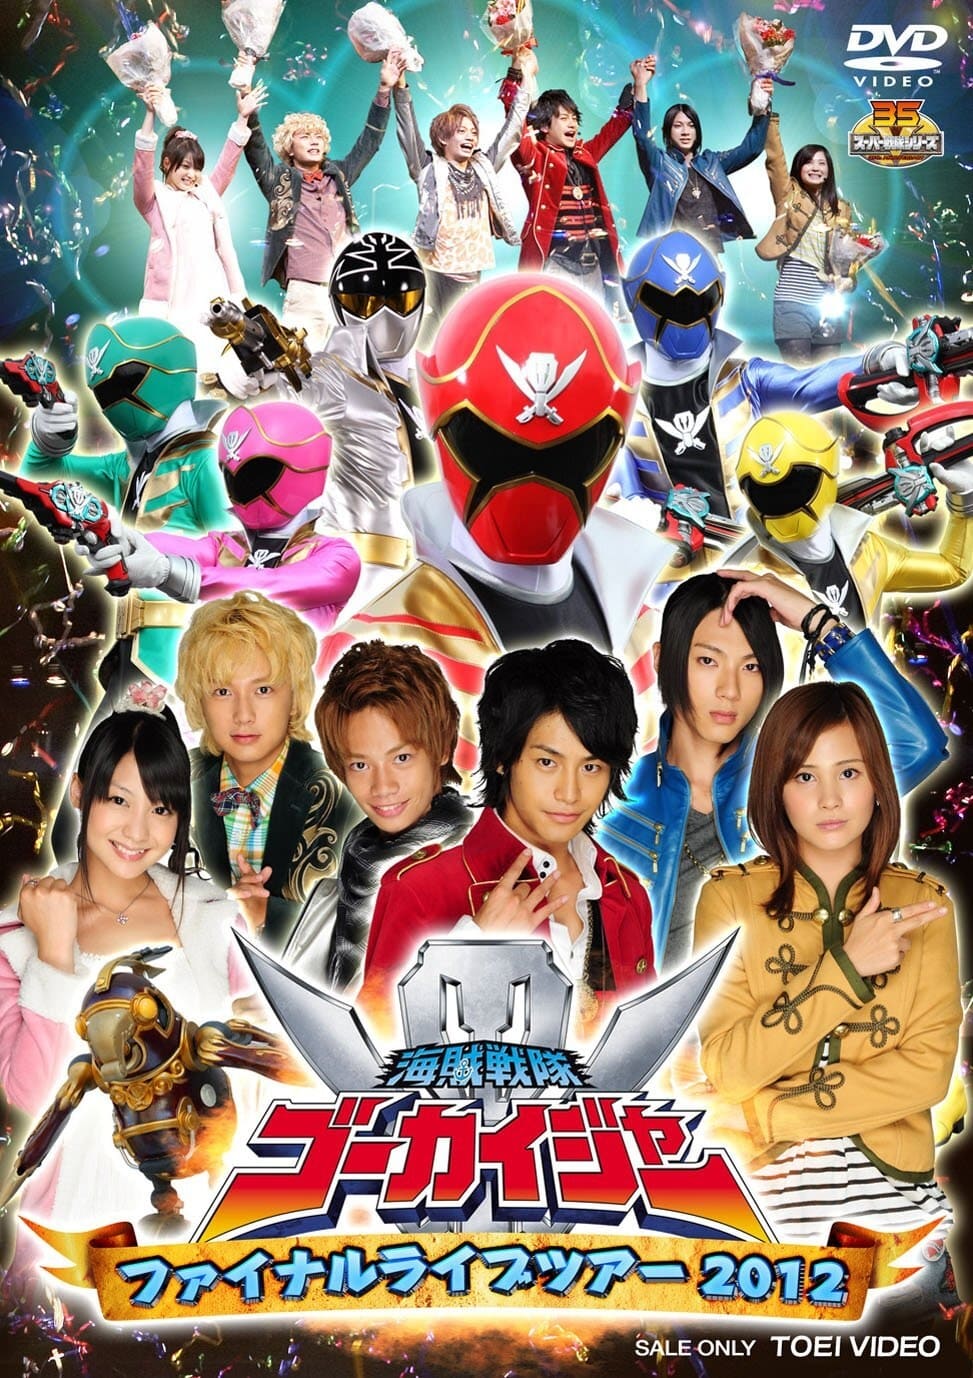 Kaizoku Sentai Gokaiger: Final Live Tour 2012